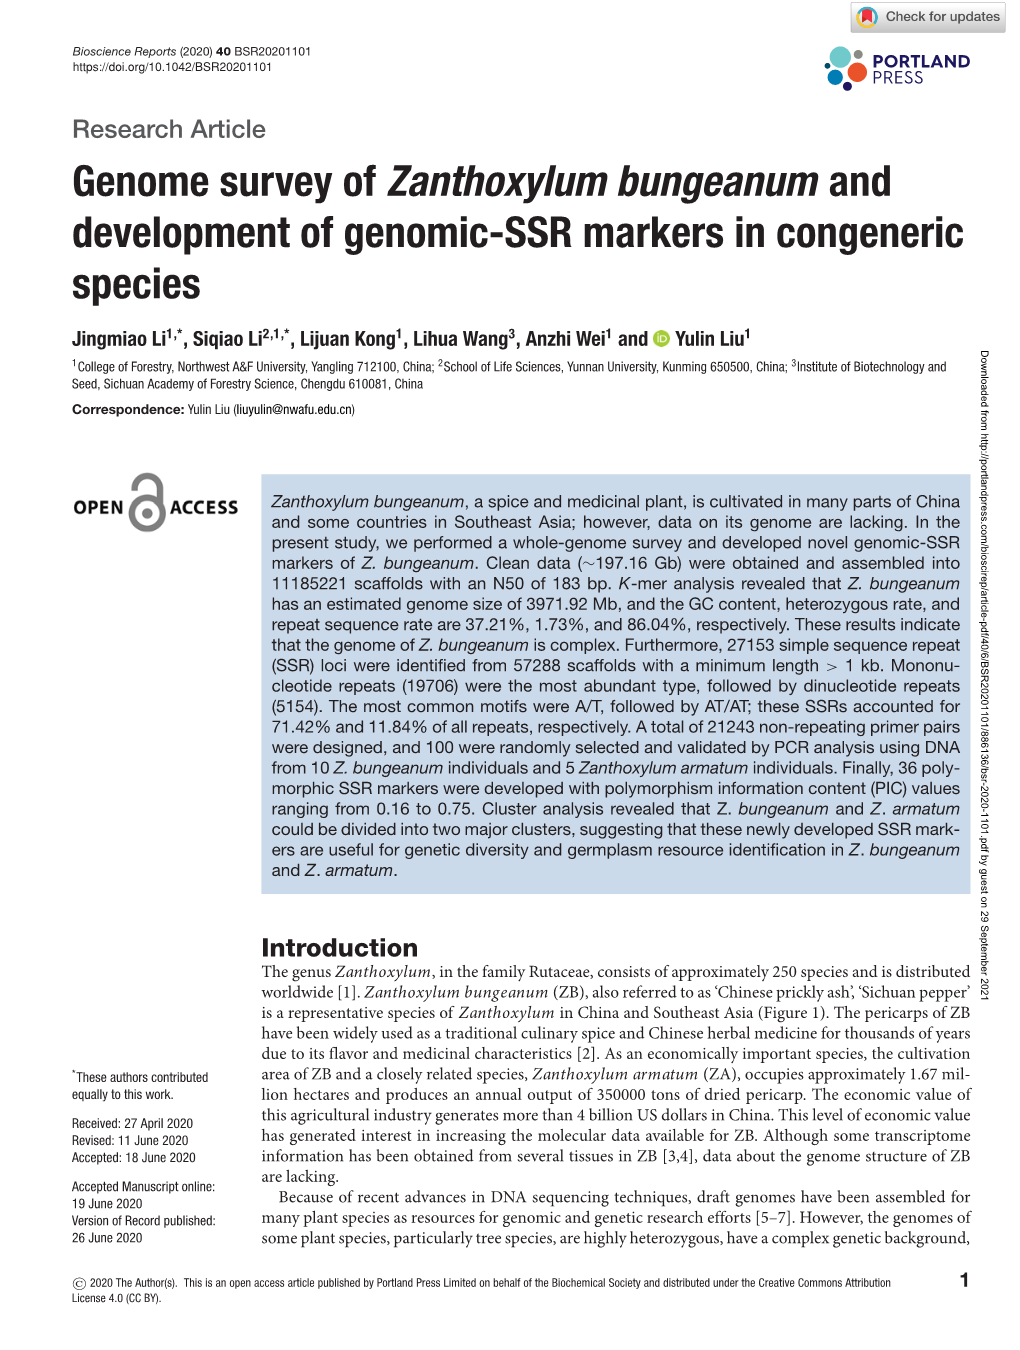 Genome Survey of Zanthoxylum Bungeanum and Development of Genomic-SSR Markers in Congeneric Species